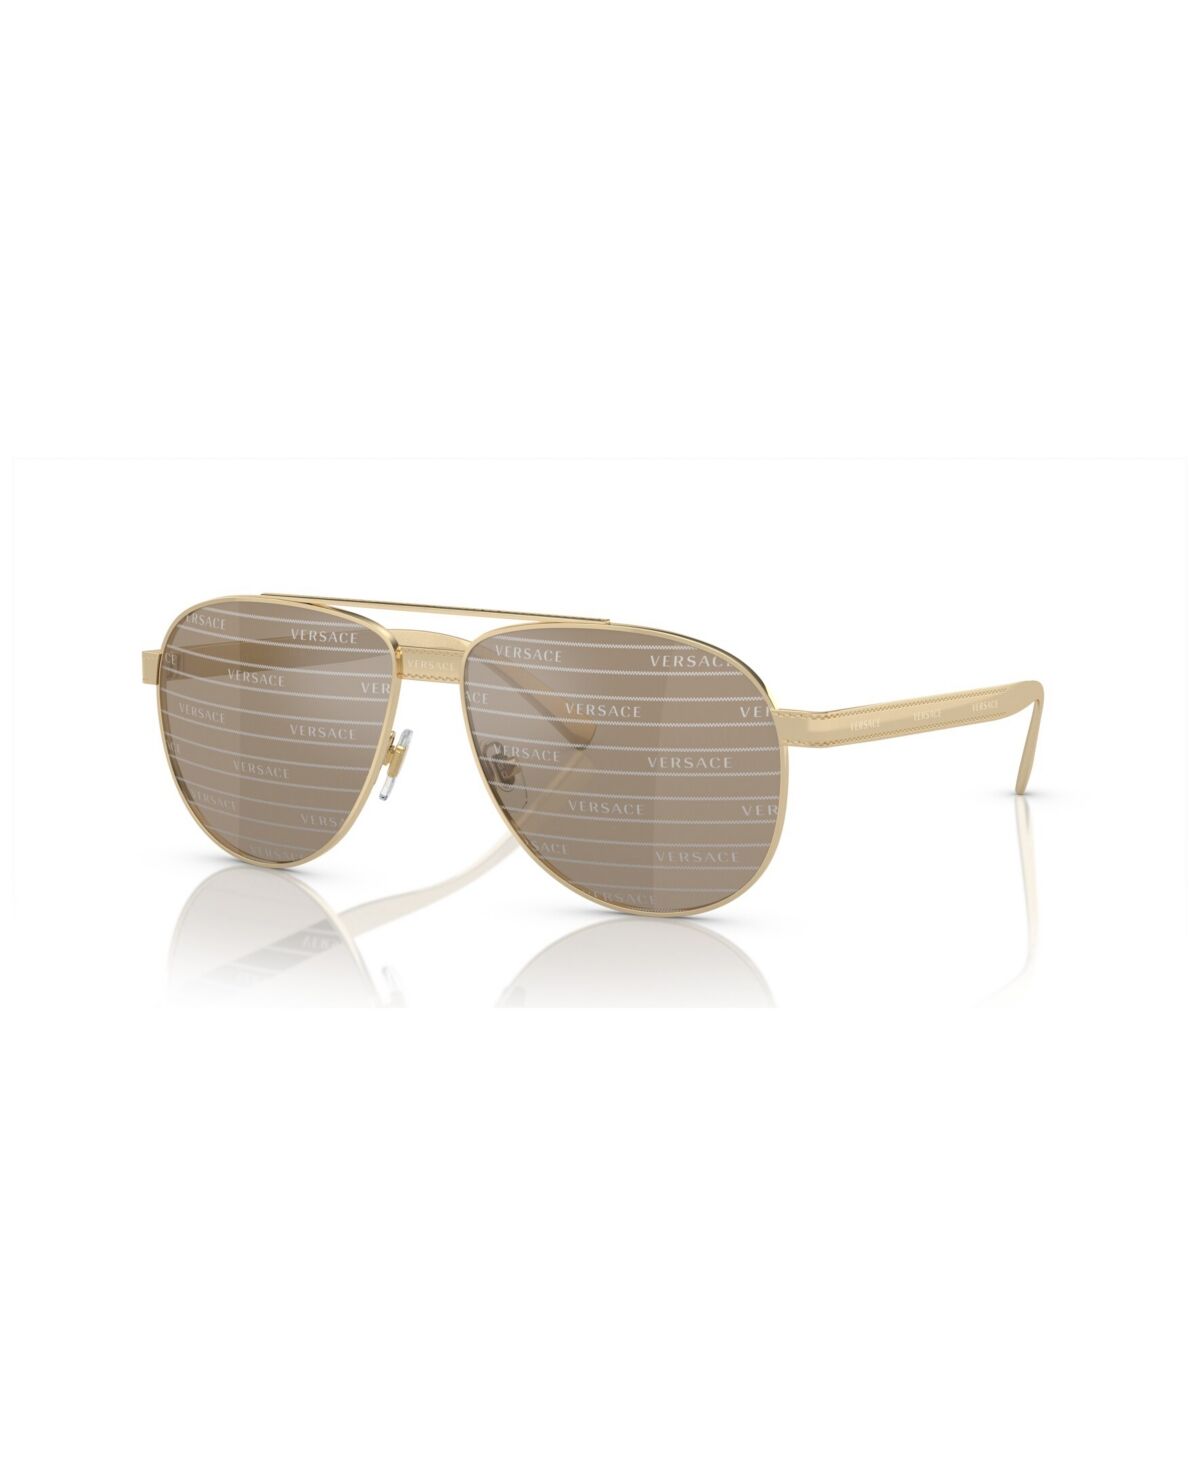 Versace Men's Sunglasses, VE2209 - Pale Gold-Tone, Brown Tamp Versace Silve